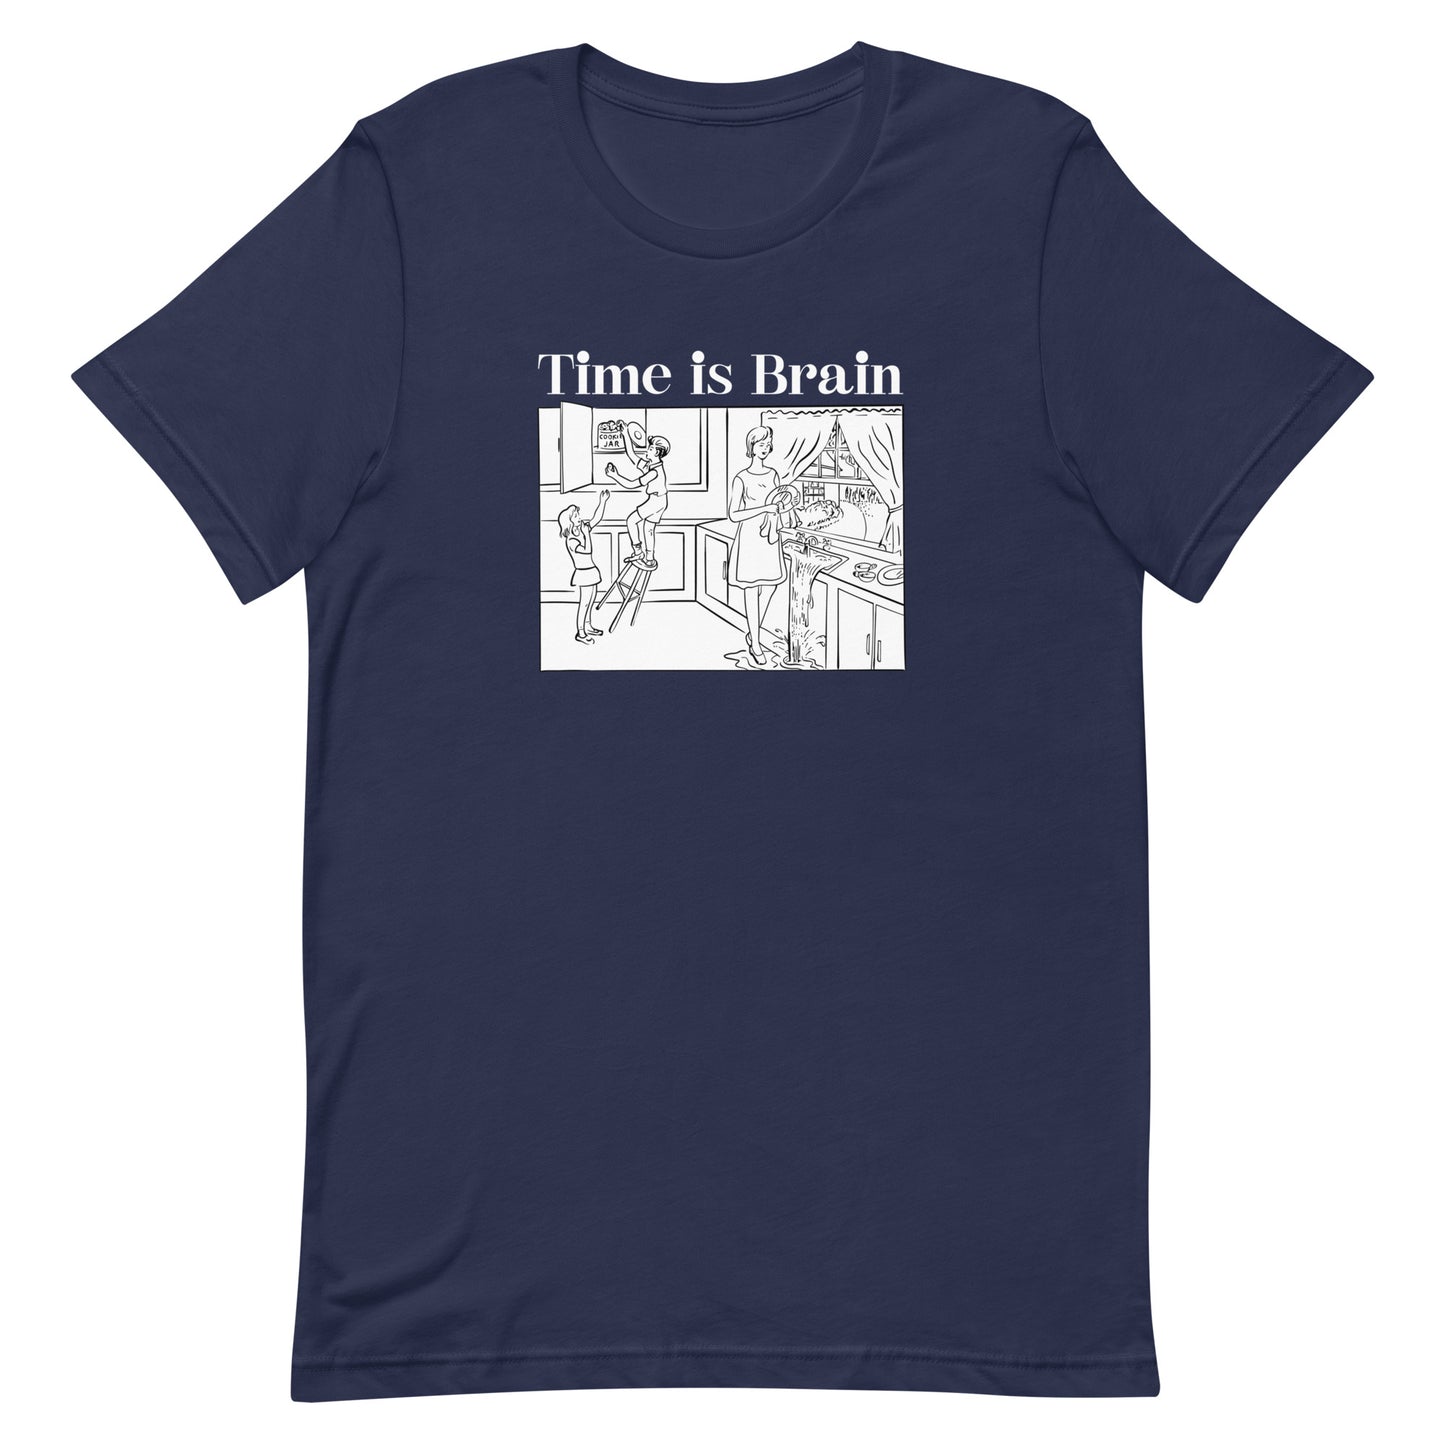 Time is Brain classic Tee